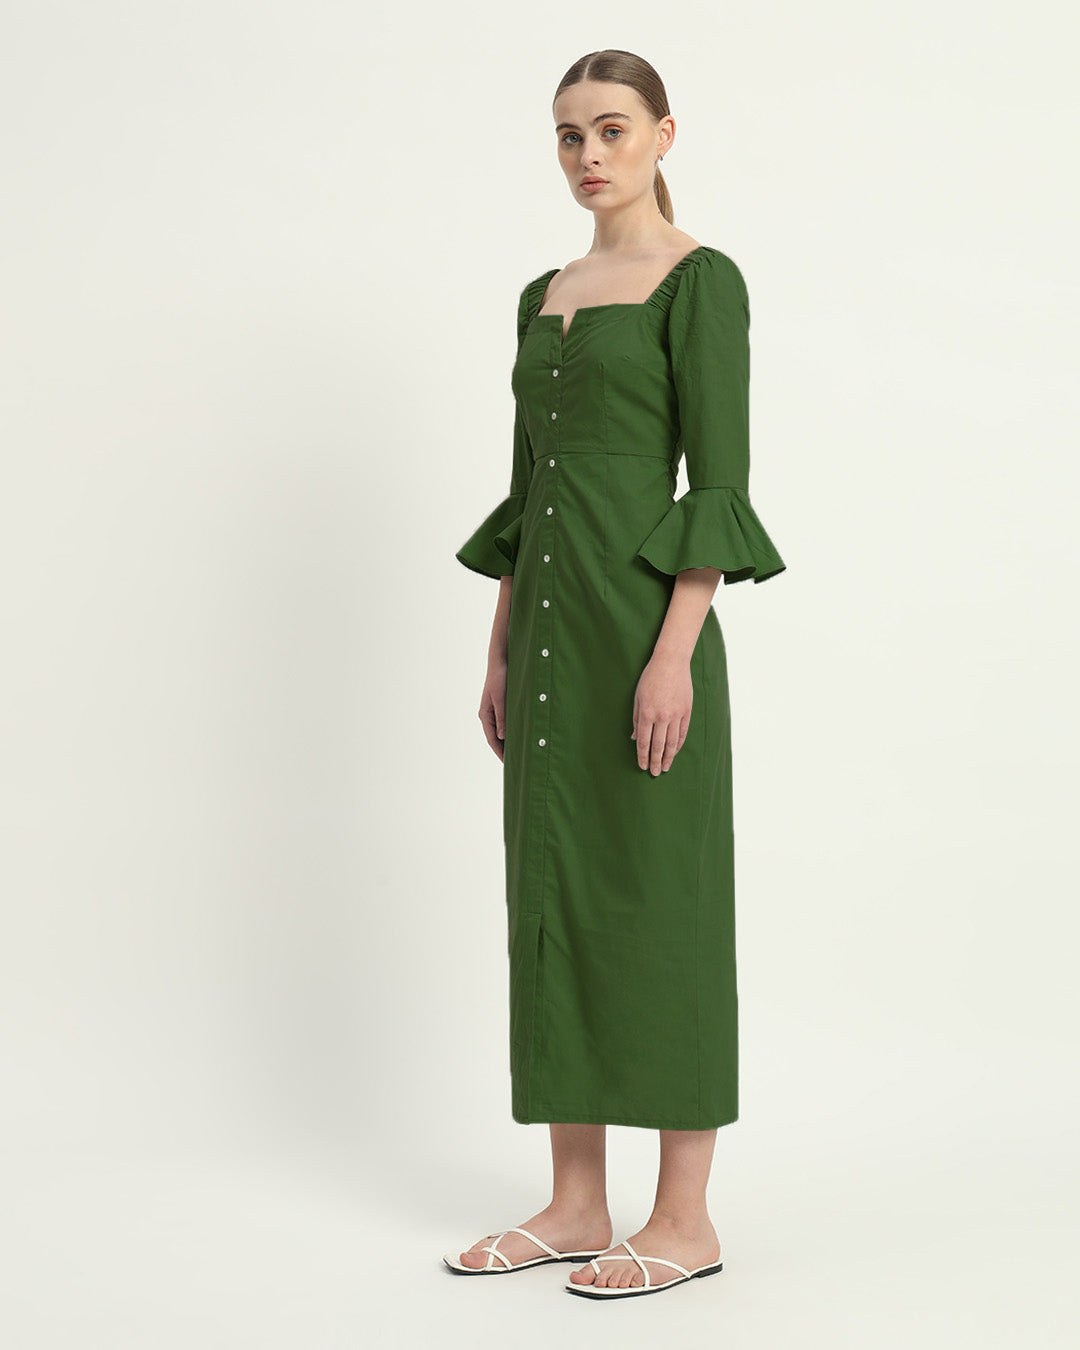 The Rosendale Emerald Cotton Dress